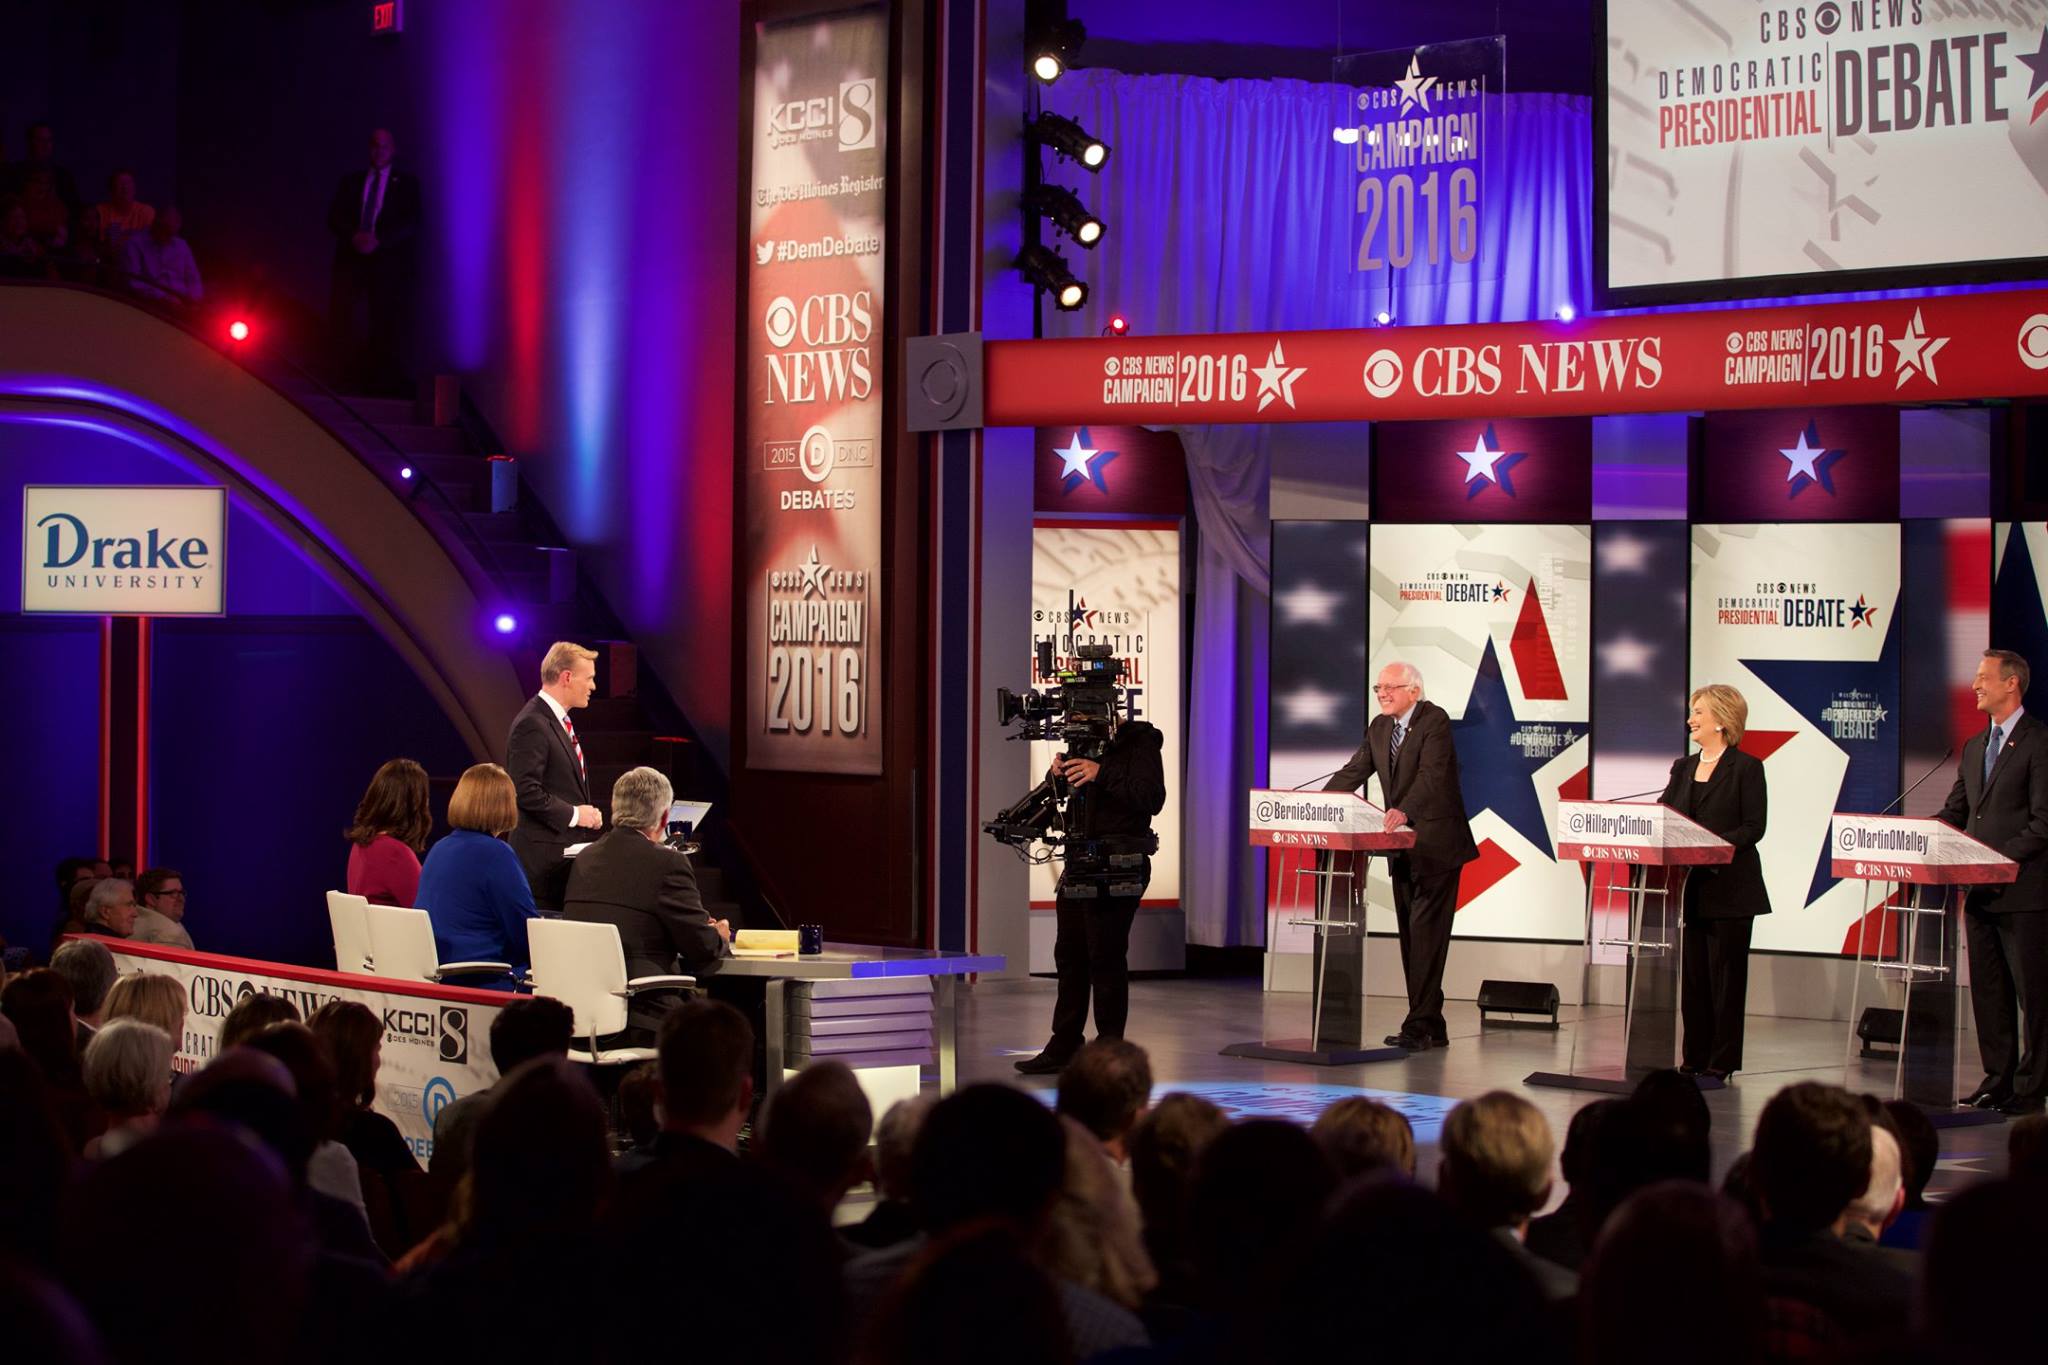 Behind the scenes at the Democratic presidential debate - Drake University Newsroom2048 x 1365